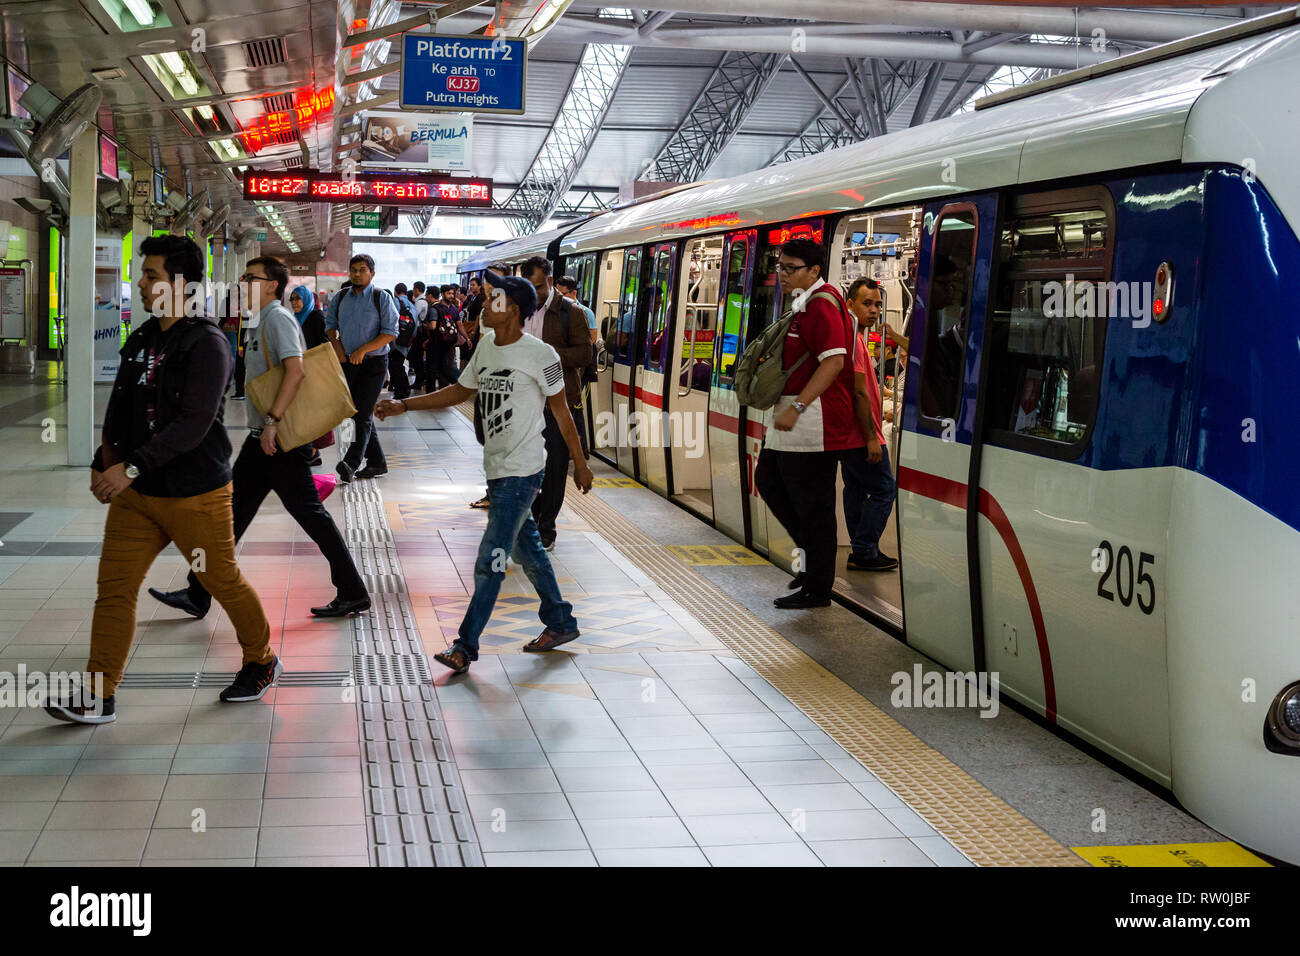 Passagiere verlassen LRT (Light Rail Transit) Zug am KL Sentral Station, Kuala Lumpur, Malaysia. Stockfoto